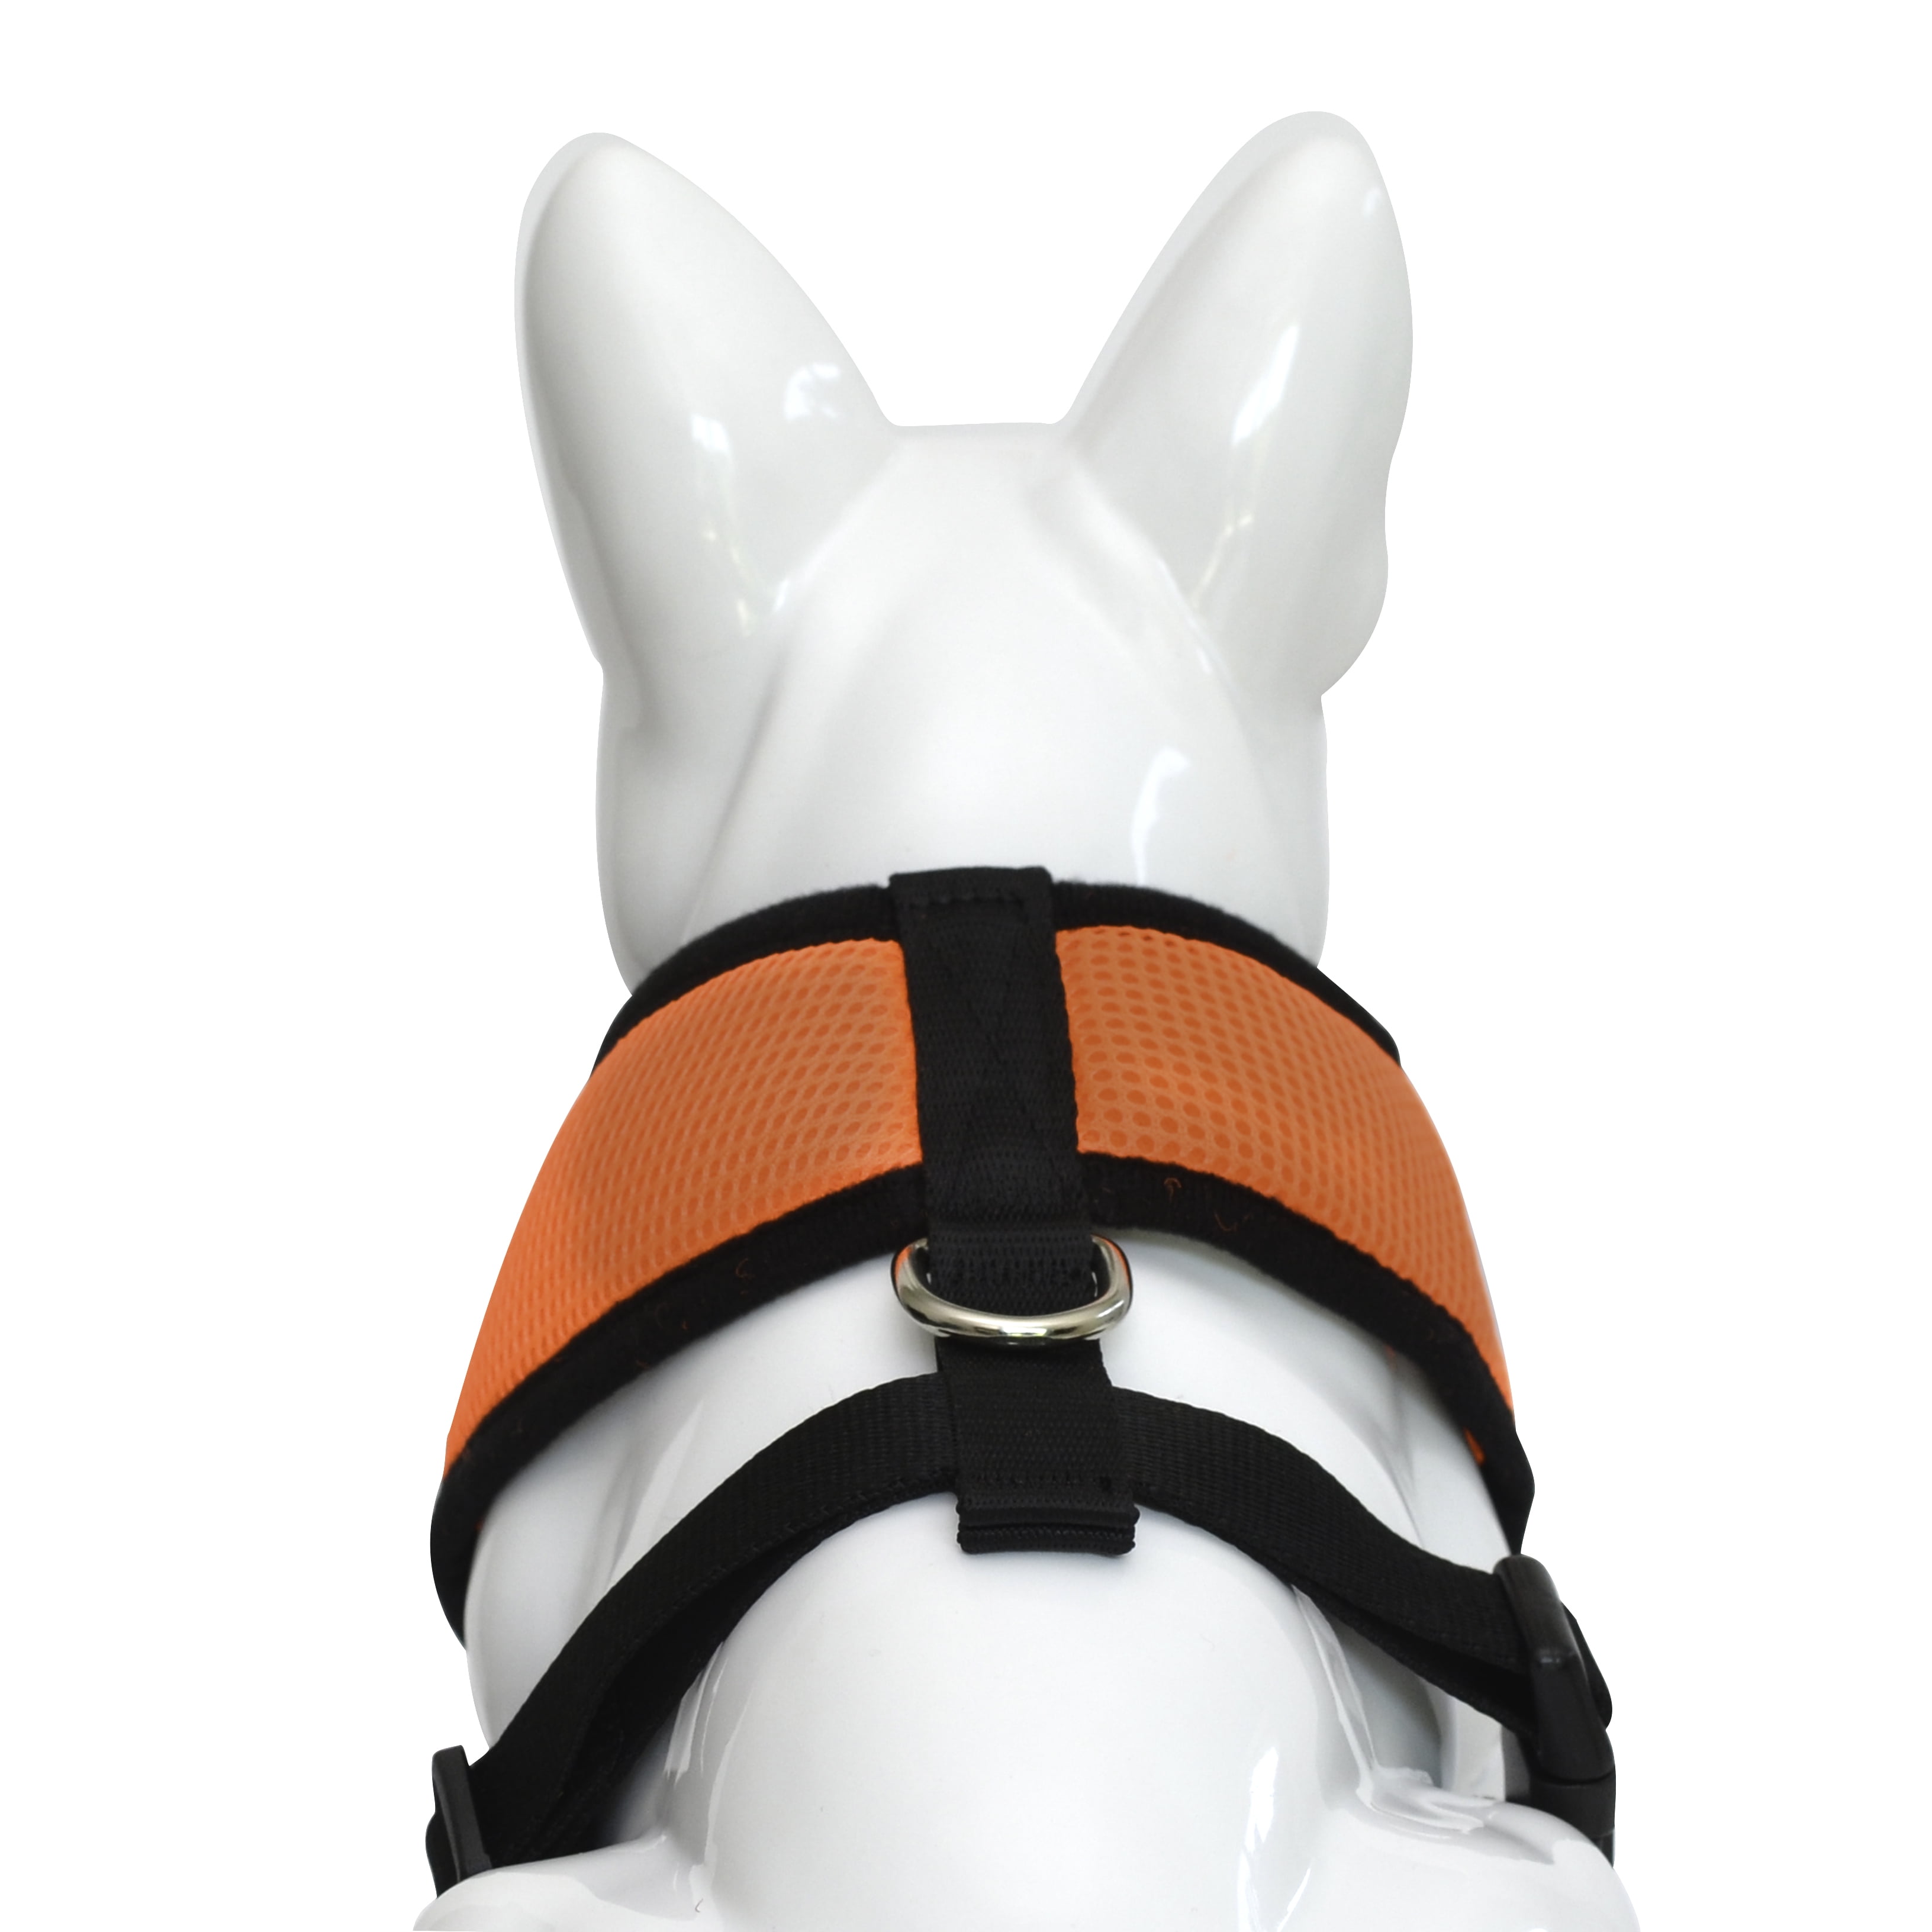 ecobark maximum comfort dog harness